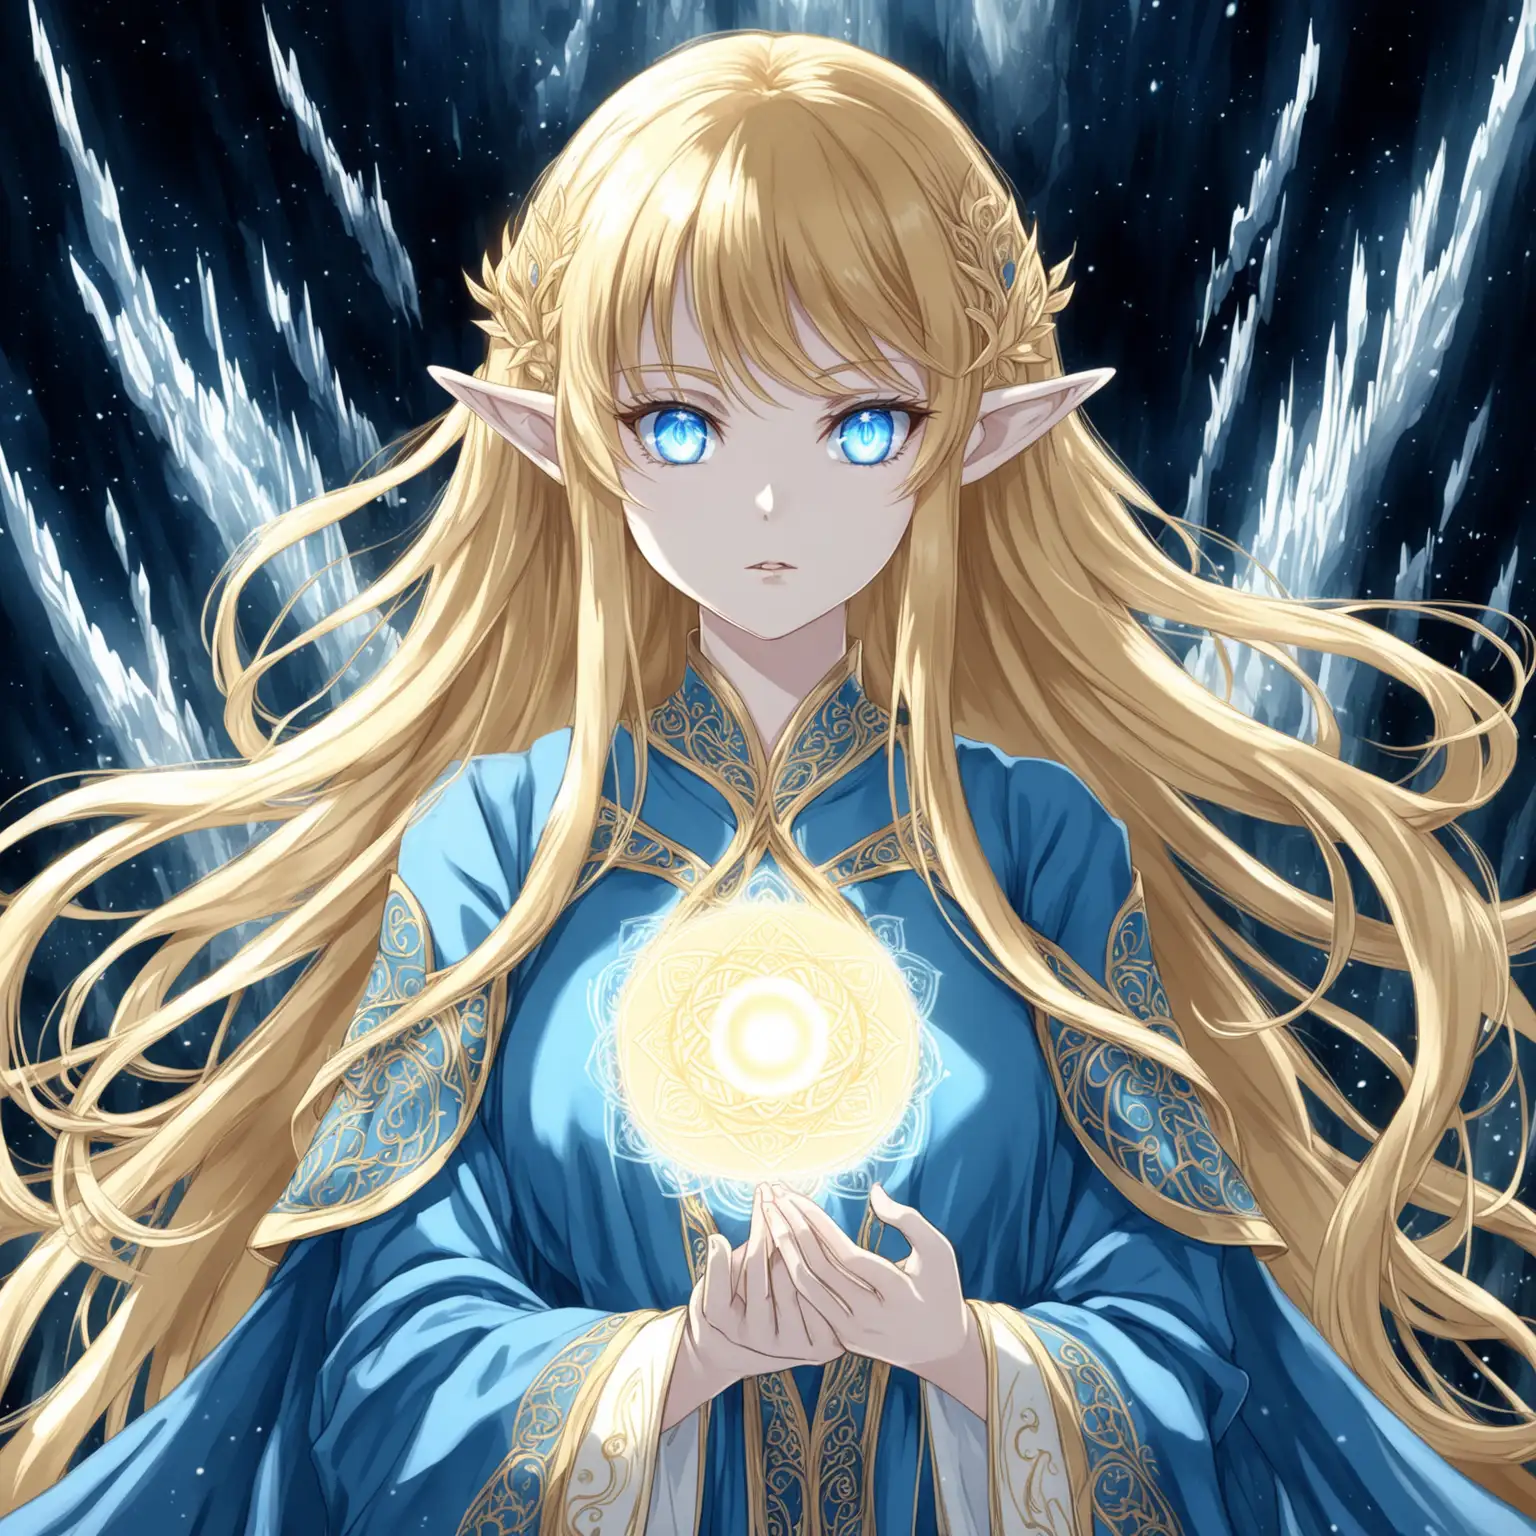 Anime girl, elf, blue eyes, golden hair, white aura, long hair, intricate blue robes